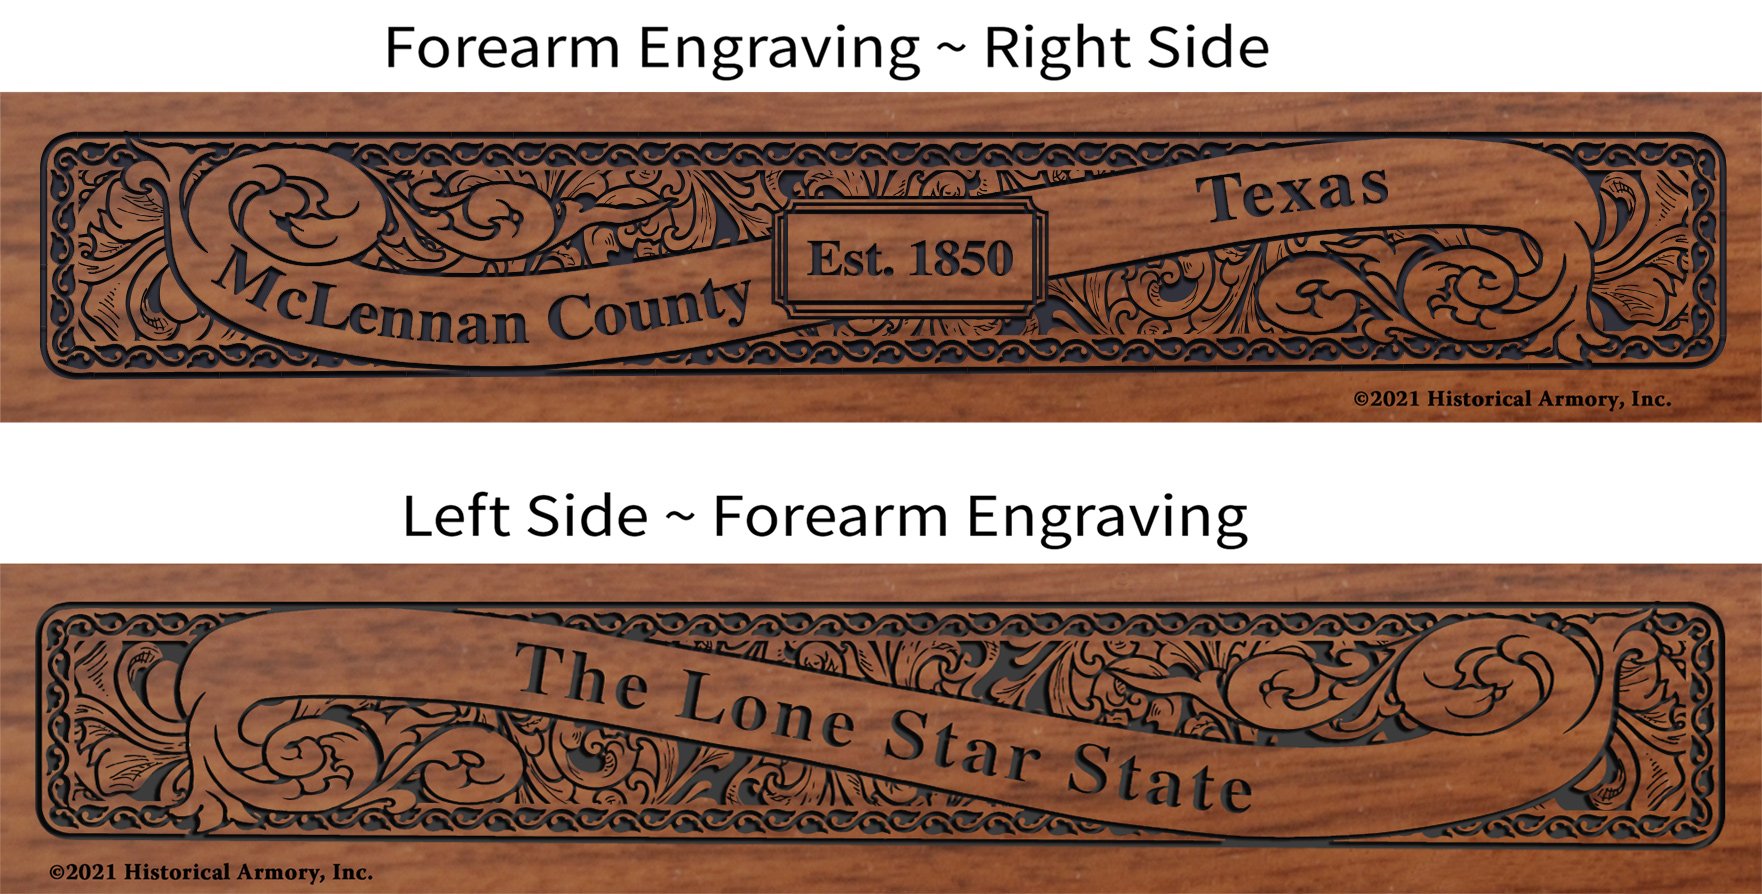 McLennan County Texas Establishment and Motto History Engraved Rifle Forearm